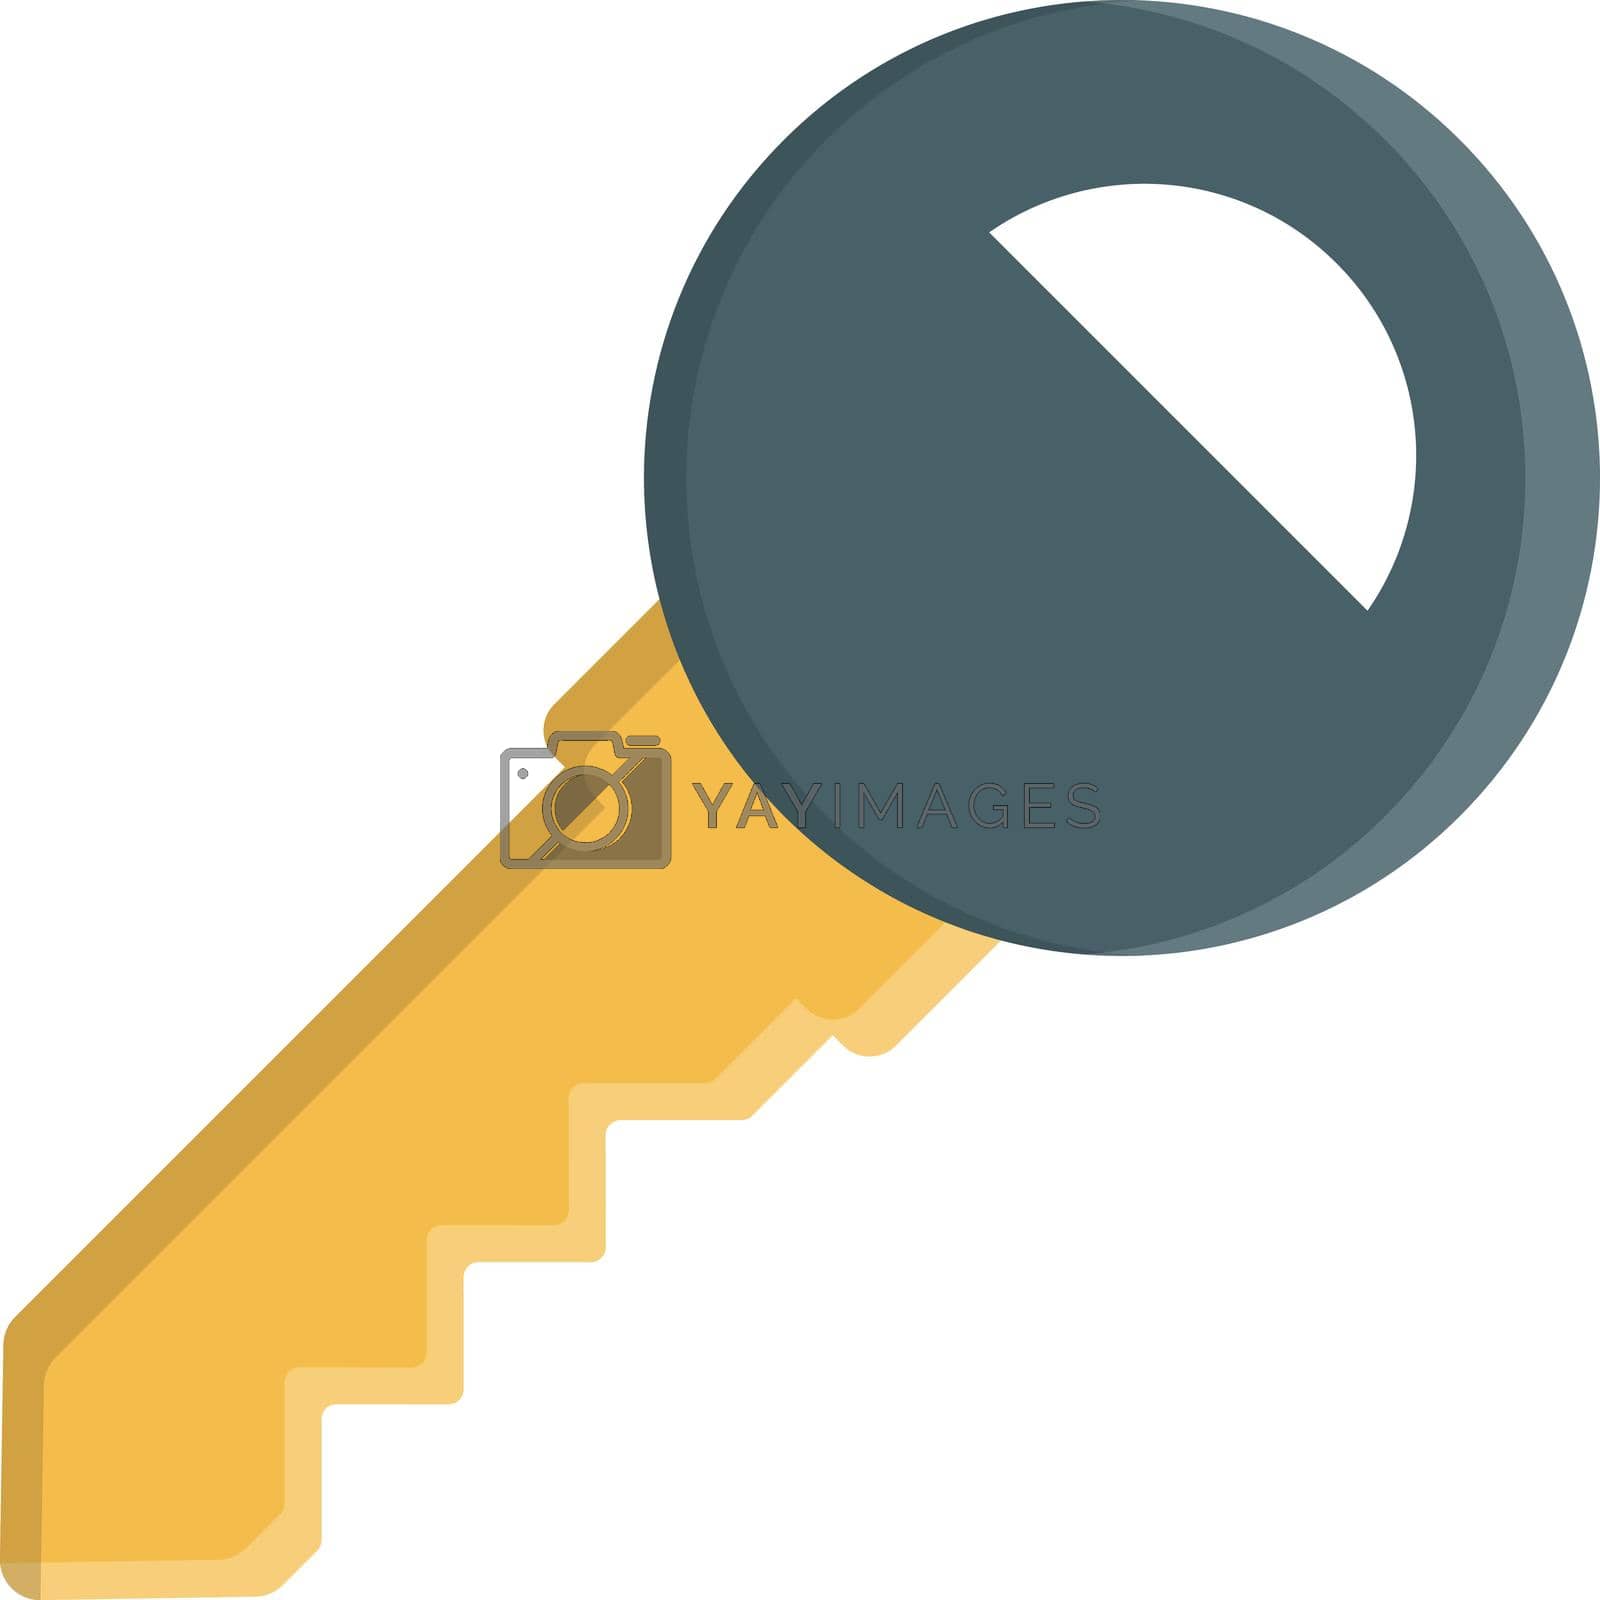 Royalty free image of key by FlaticonsDesign